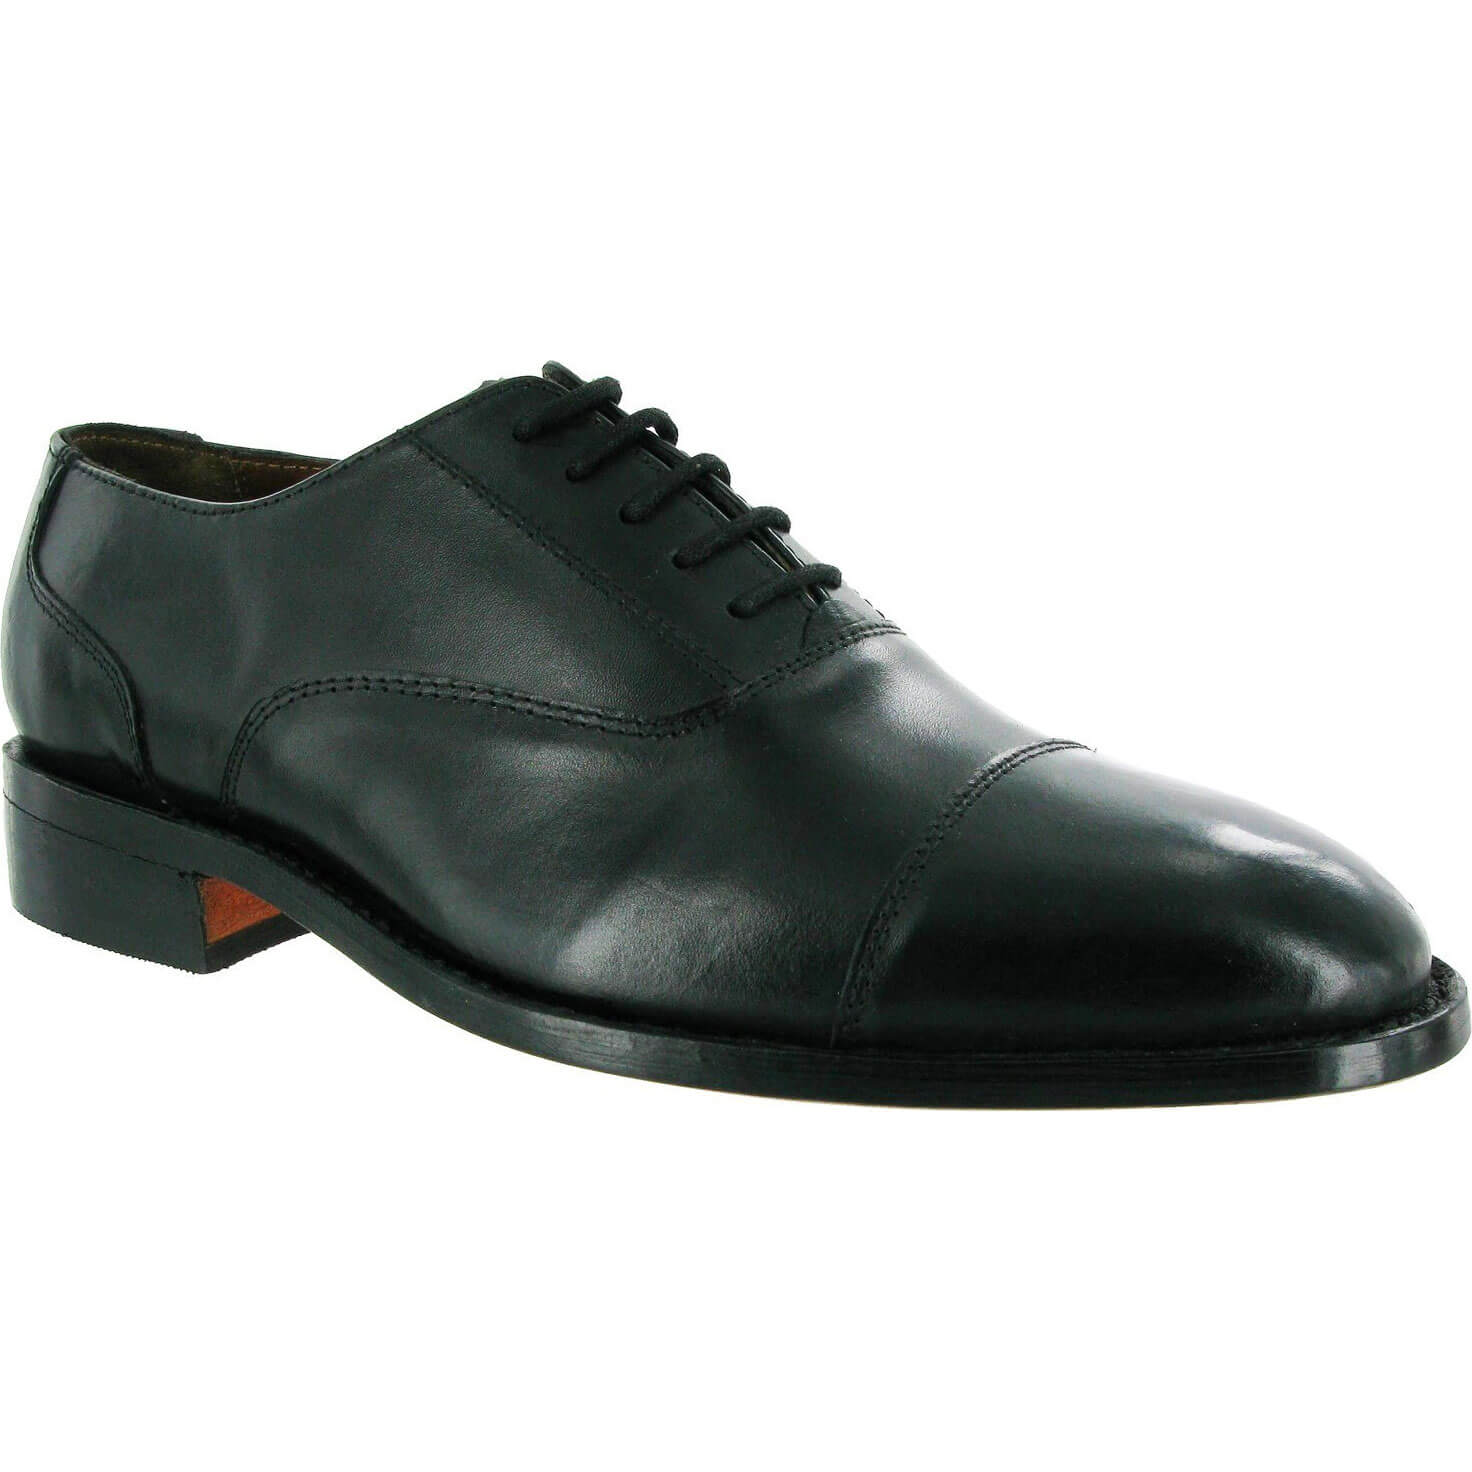 Image of Amblers James Leather Soled Oxford Dress Shoe Black Size 6